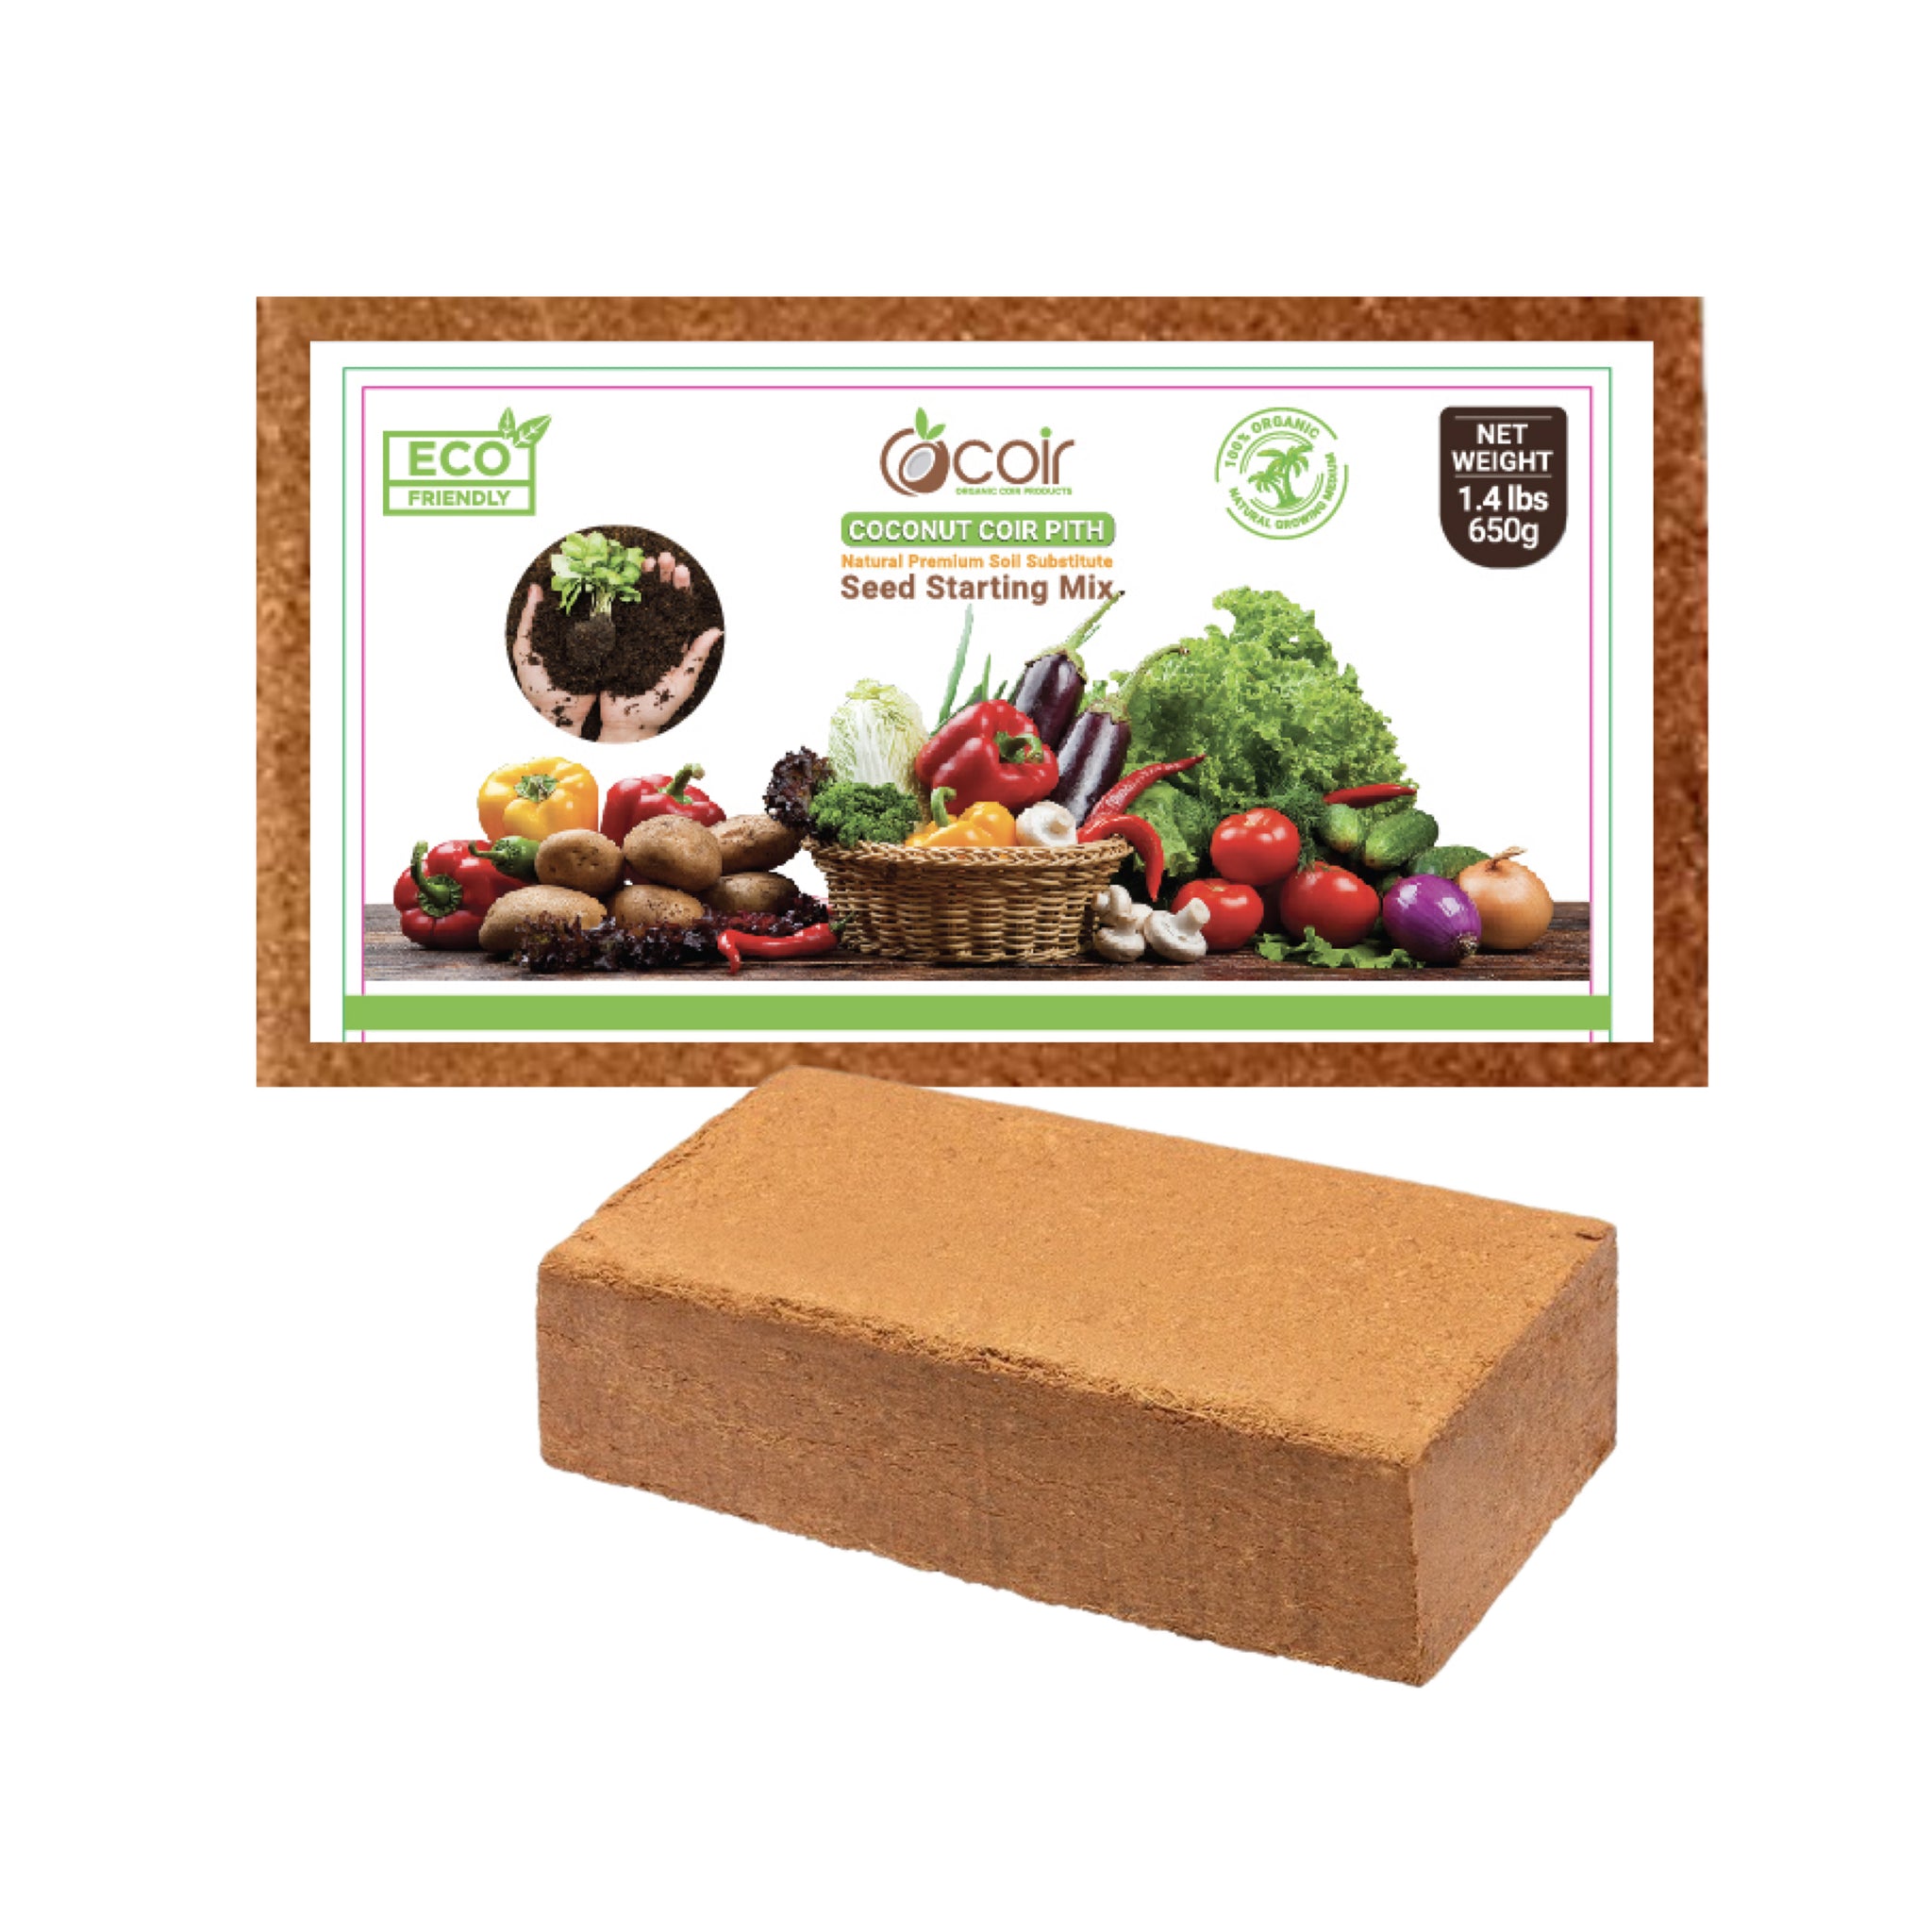 62.1 Gallons Coco Coir Brick for Plants- 27 Pack Coconut Coir Bricks  Premium 100% Organic